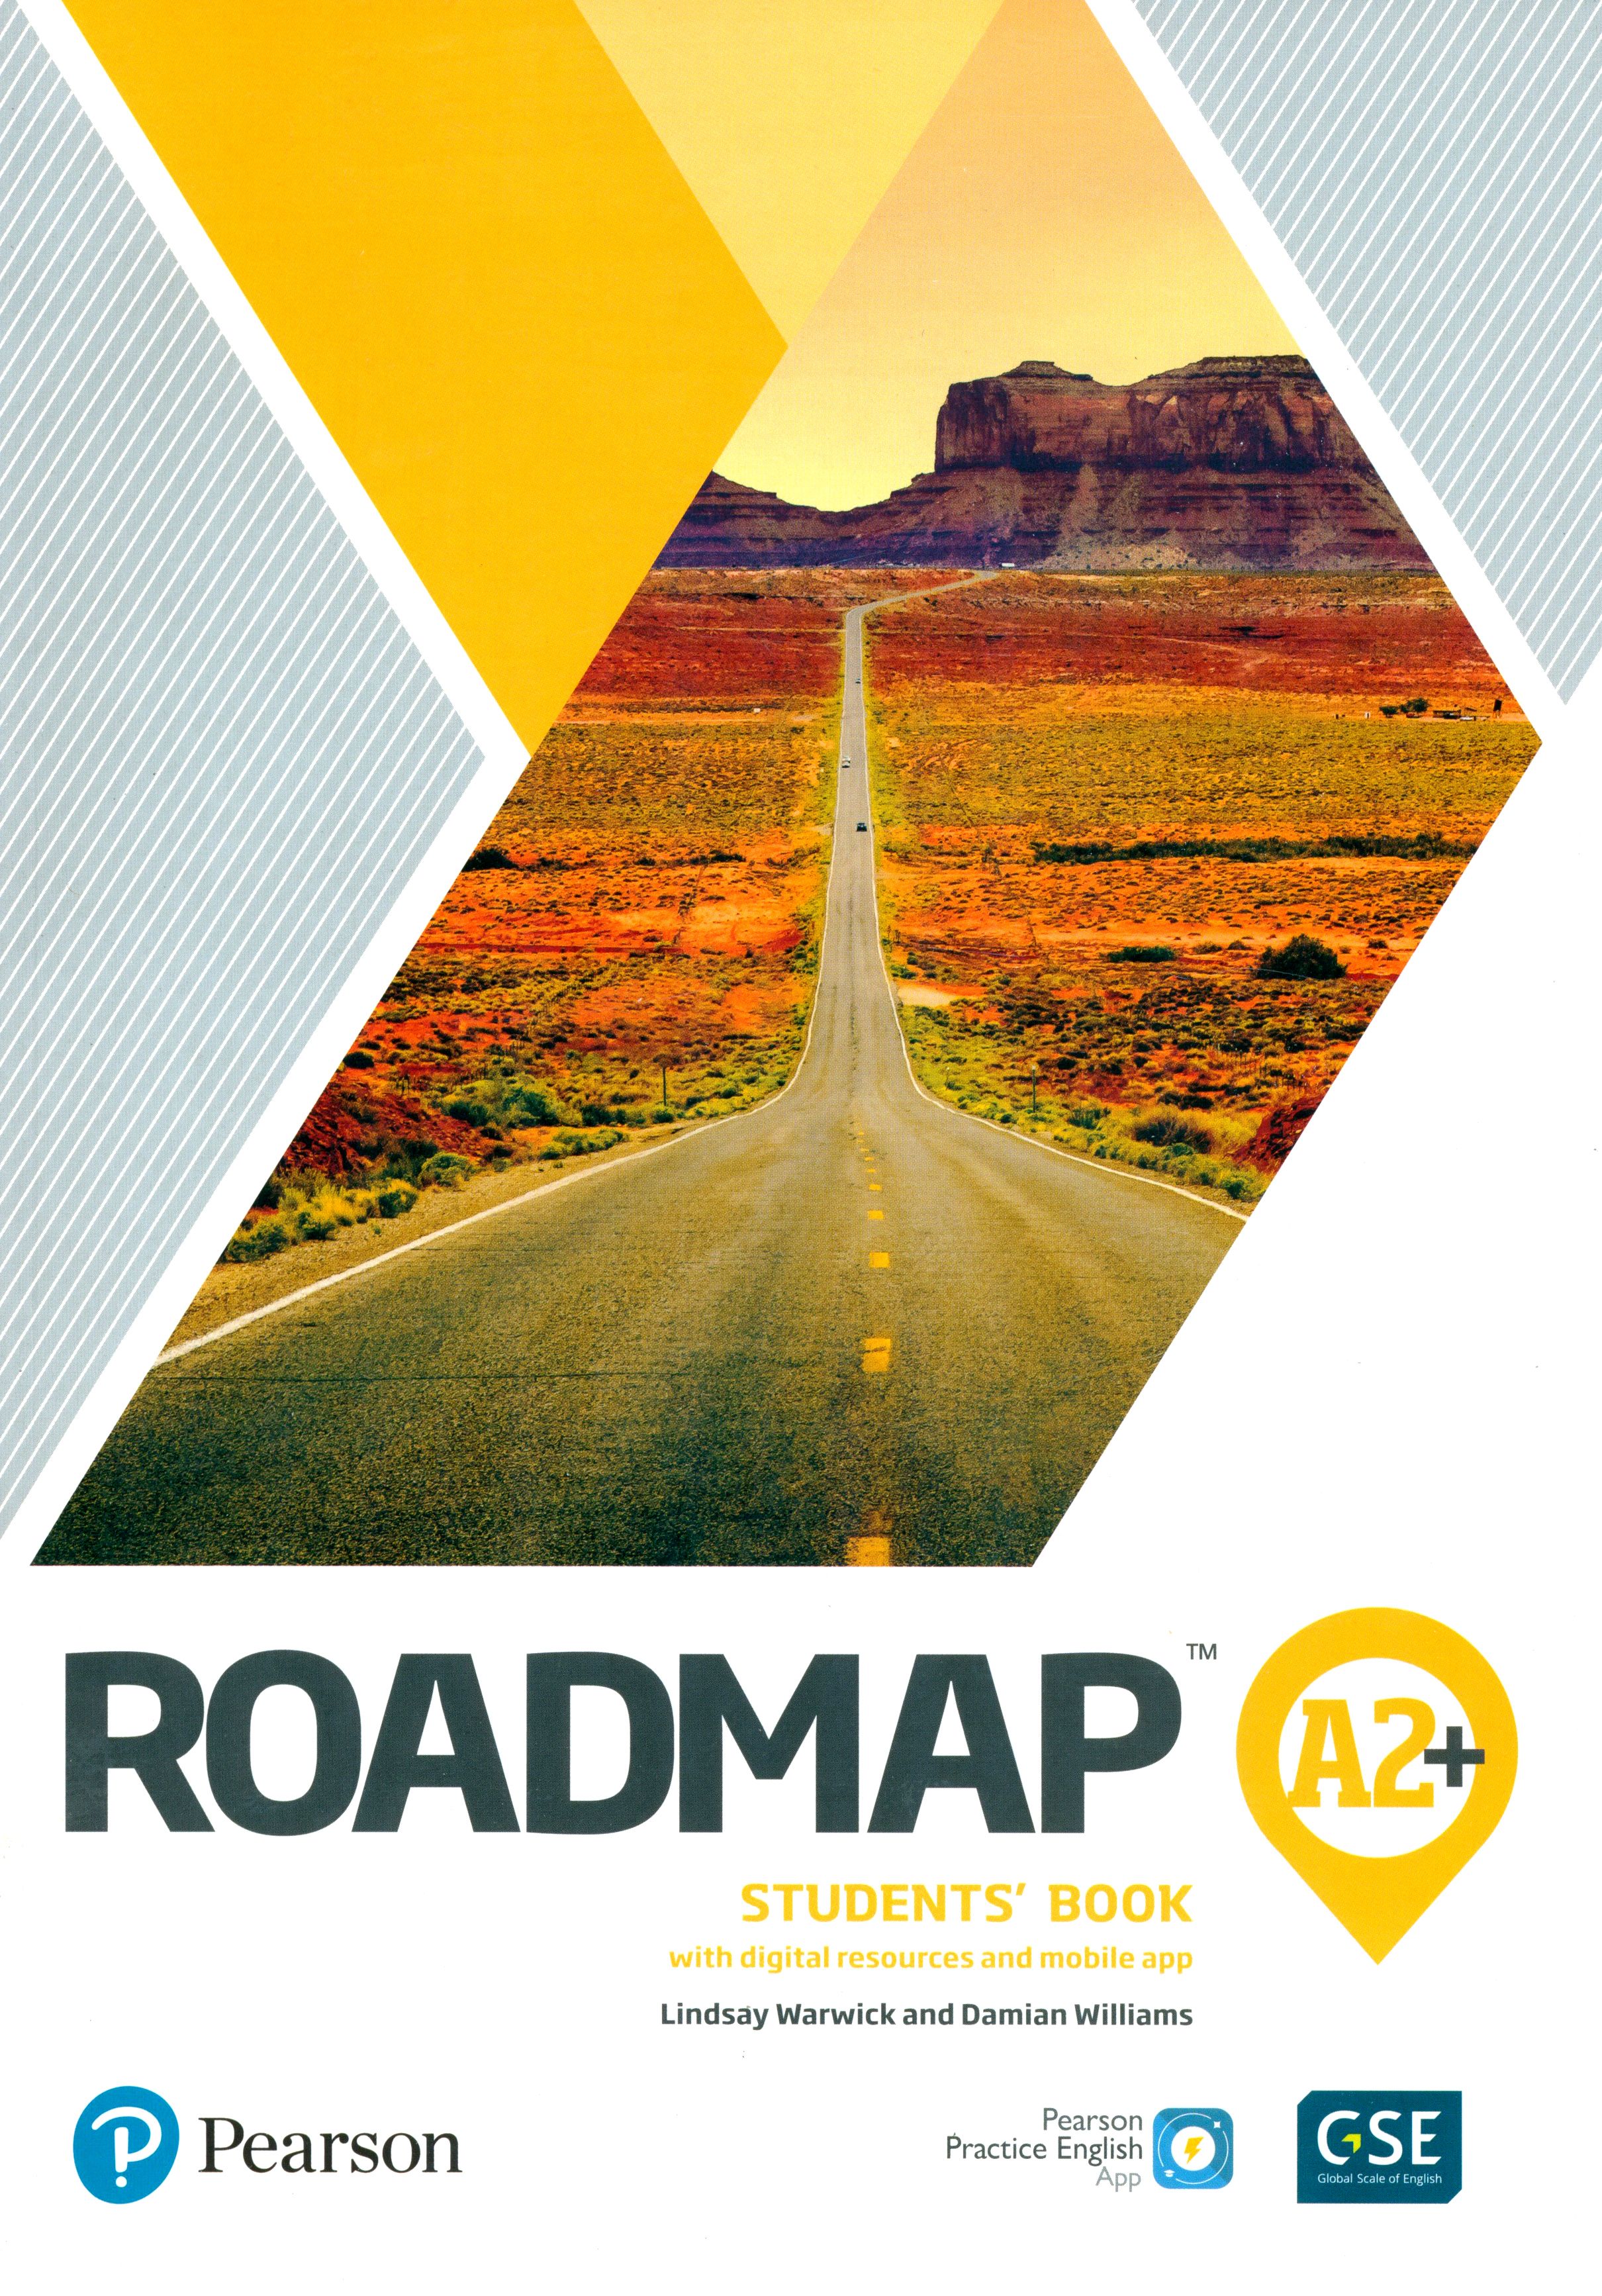 Roadmap a2+ students' book. Roadmap books. Roadmap Workbook. Roadmap student s book